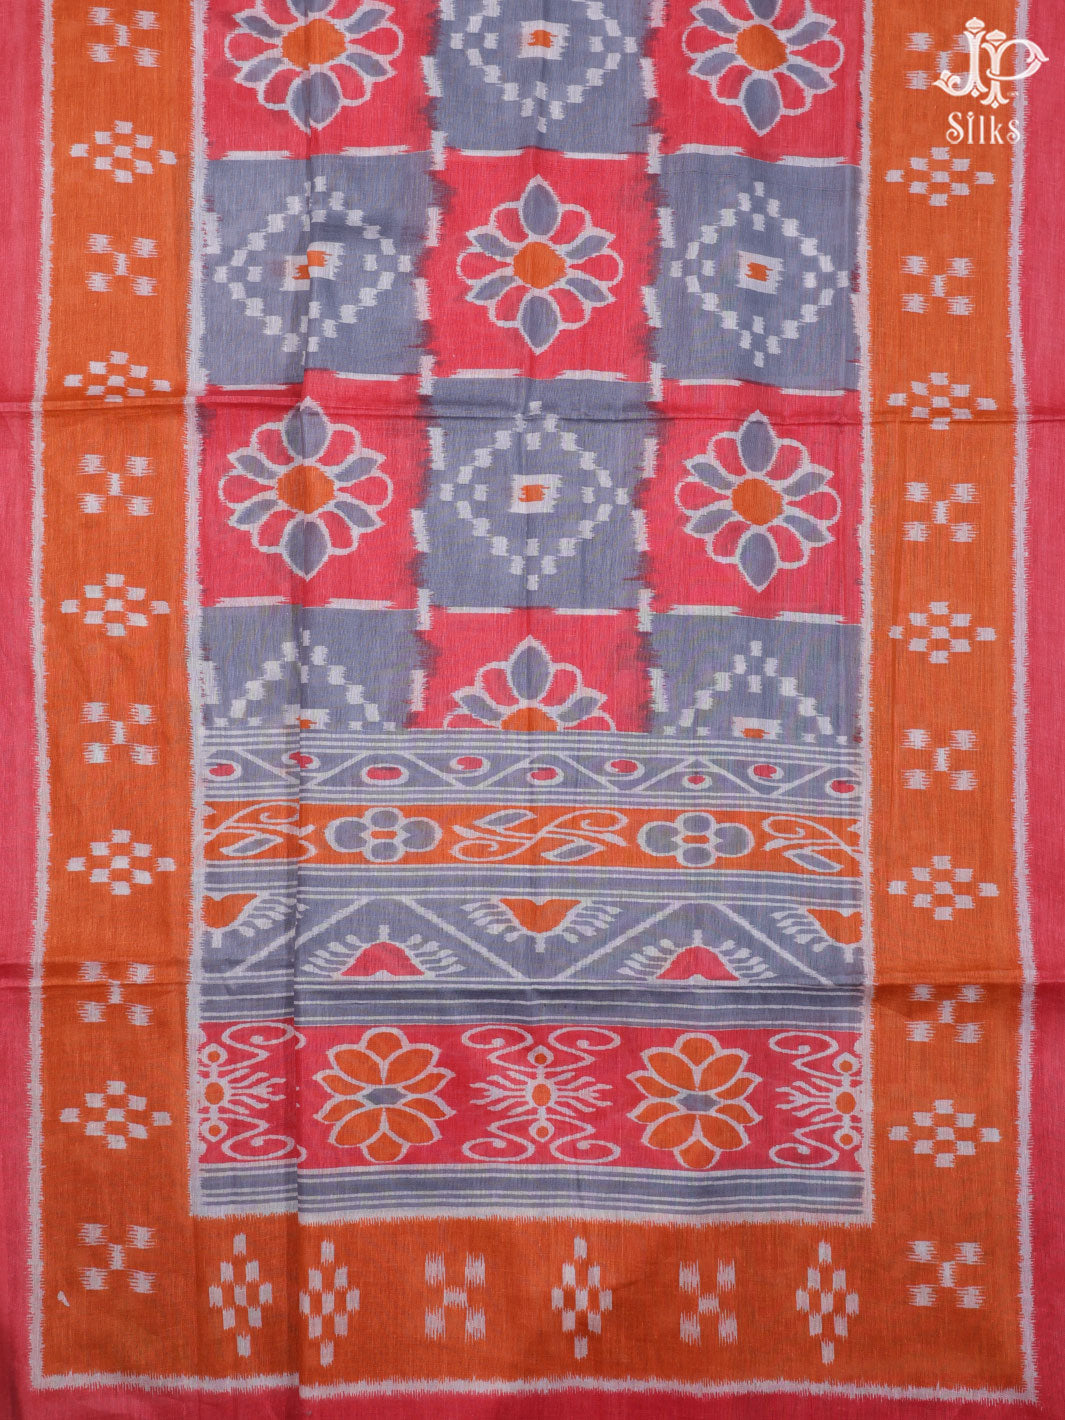 Multicolor Cotton Chudidhar Material - D923 - View 5